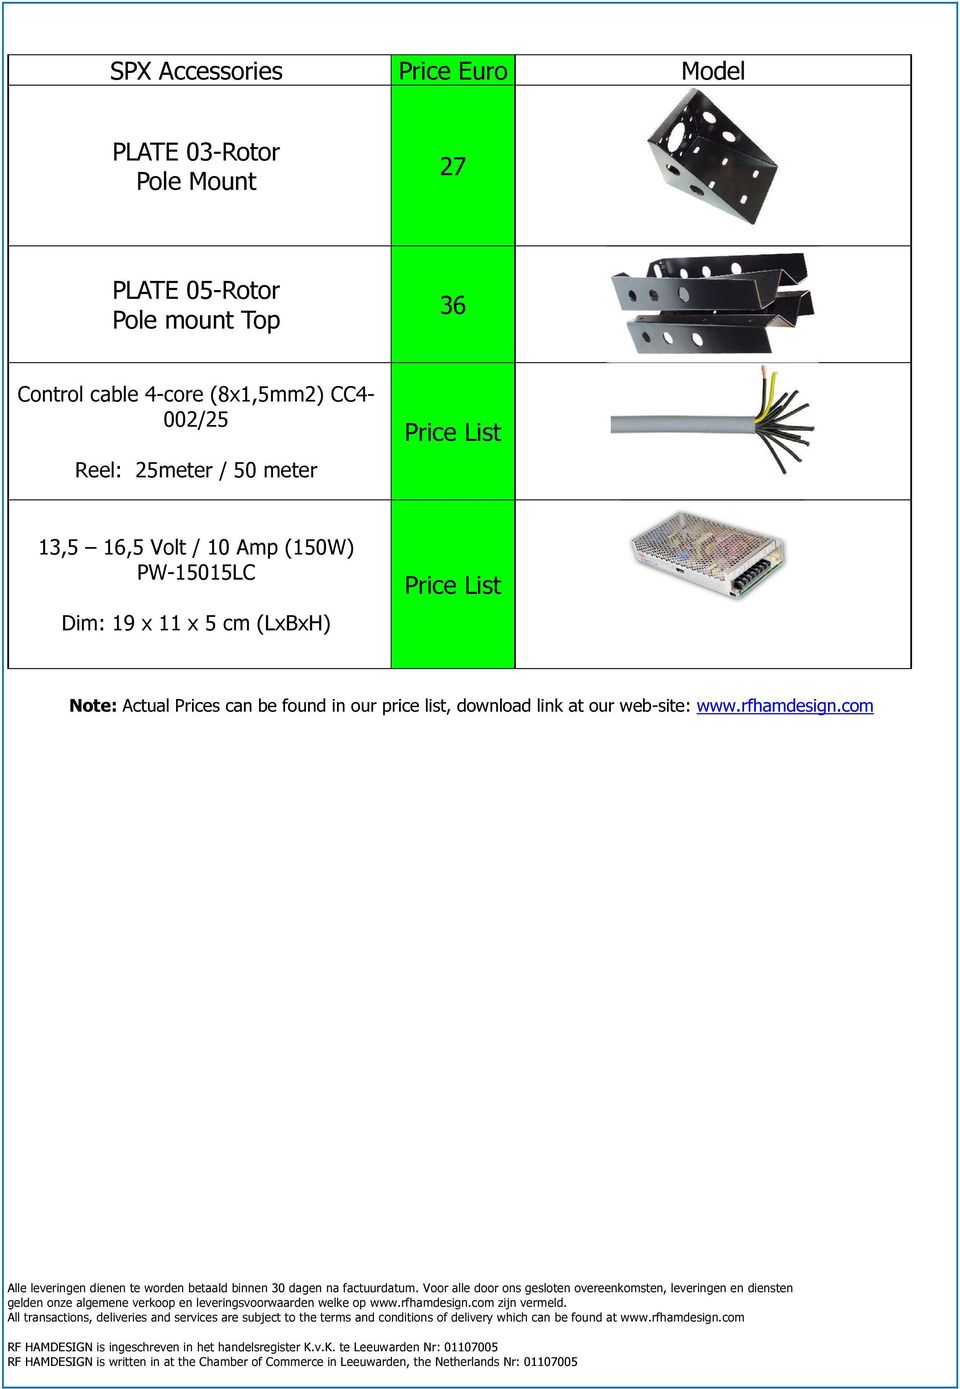 16,5 Volt / 10 Amp (150W) PW-15015LC Dim: 19 x 11 x 5 cm (LxBxH) Price List Note: Actual